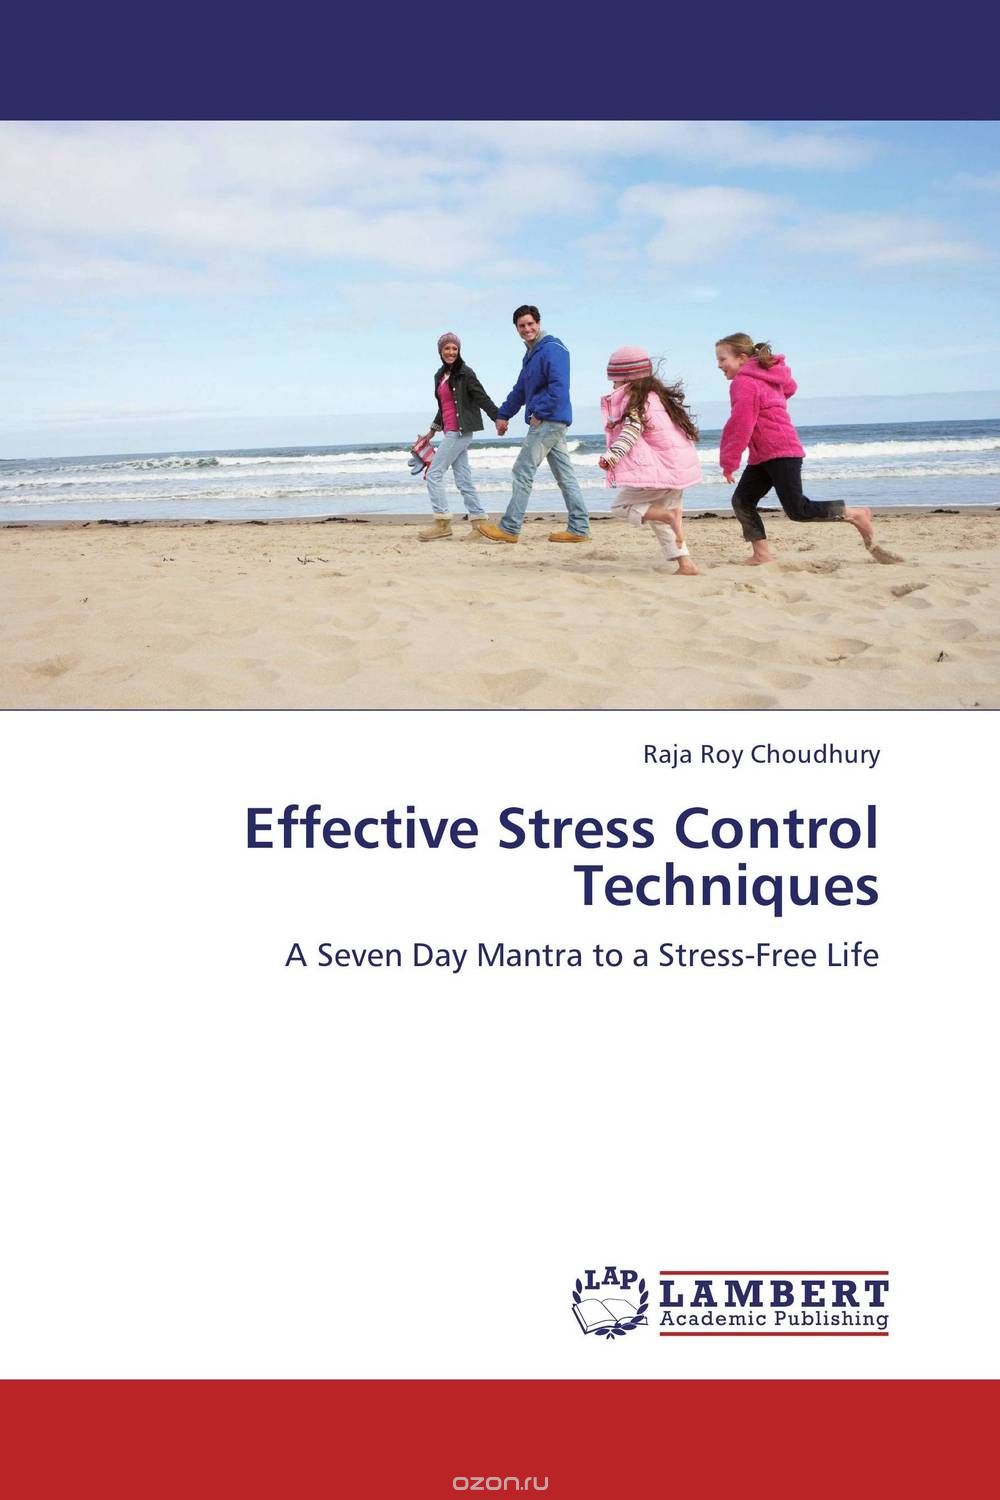 Скачать книгу "Effective Stress Control Techniques"